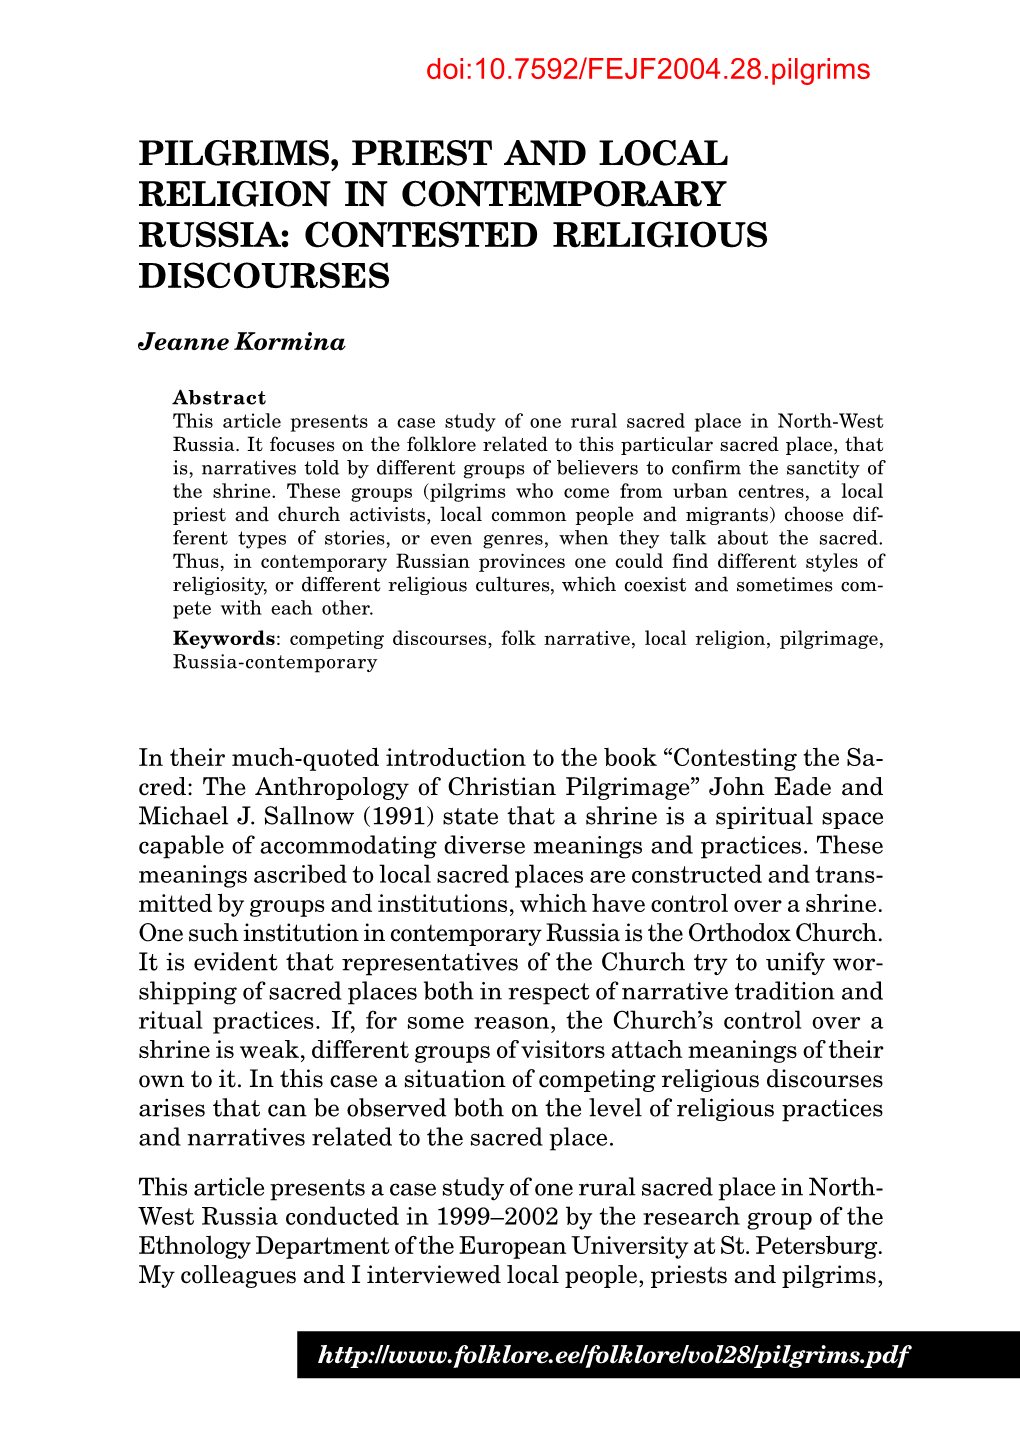 Pilgrims, Priest and Local Religion in Contemporary Russia: Contested Religious Discourses